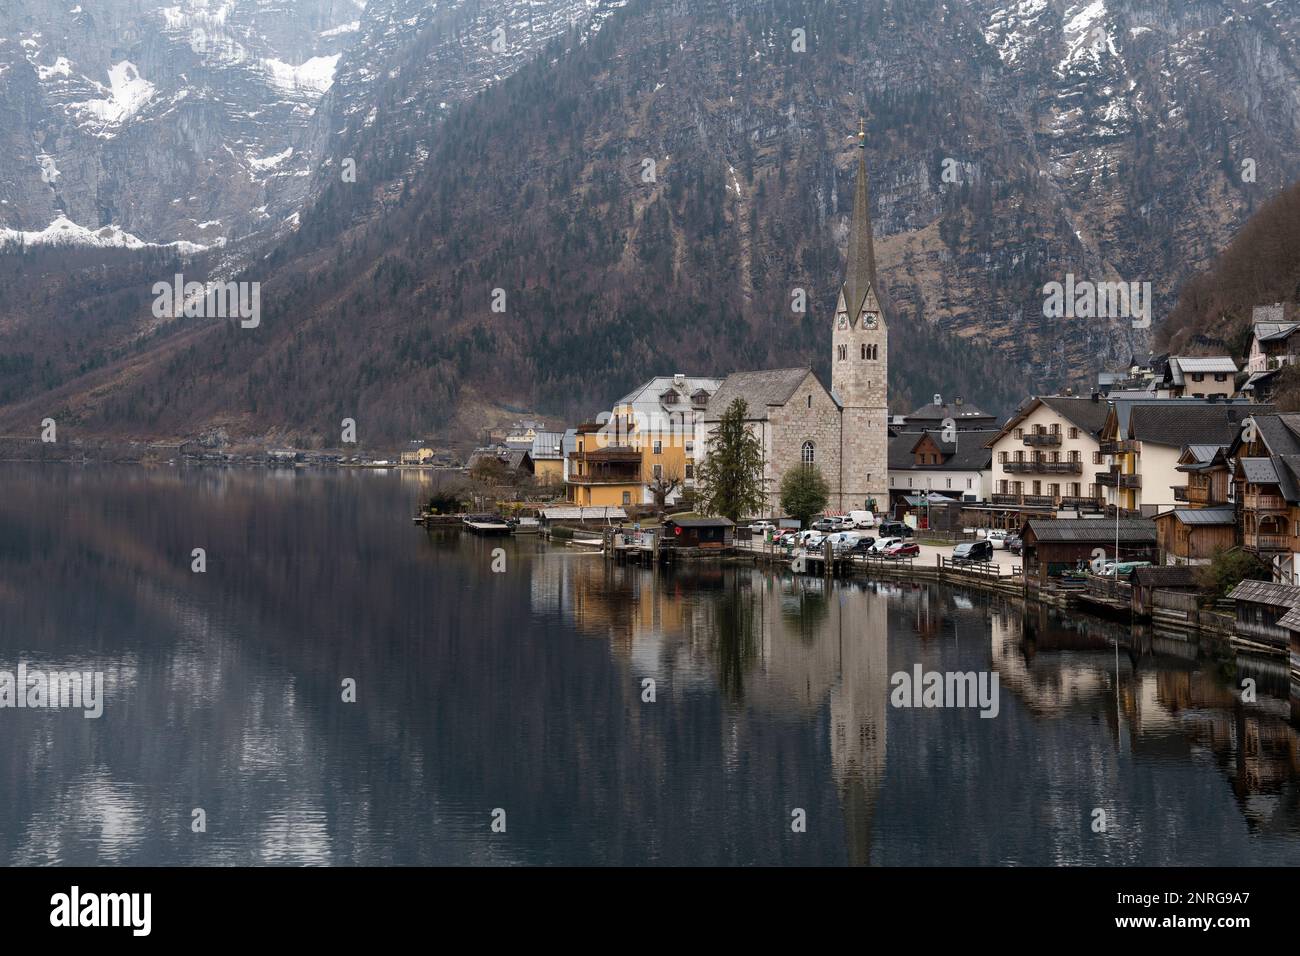 Famous Hallstatt lakeside town in the Alps, Salzkammergut region, Austria Stock Photo